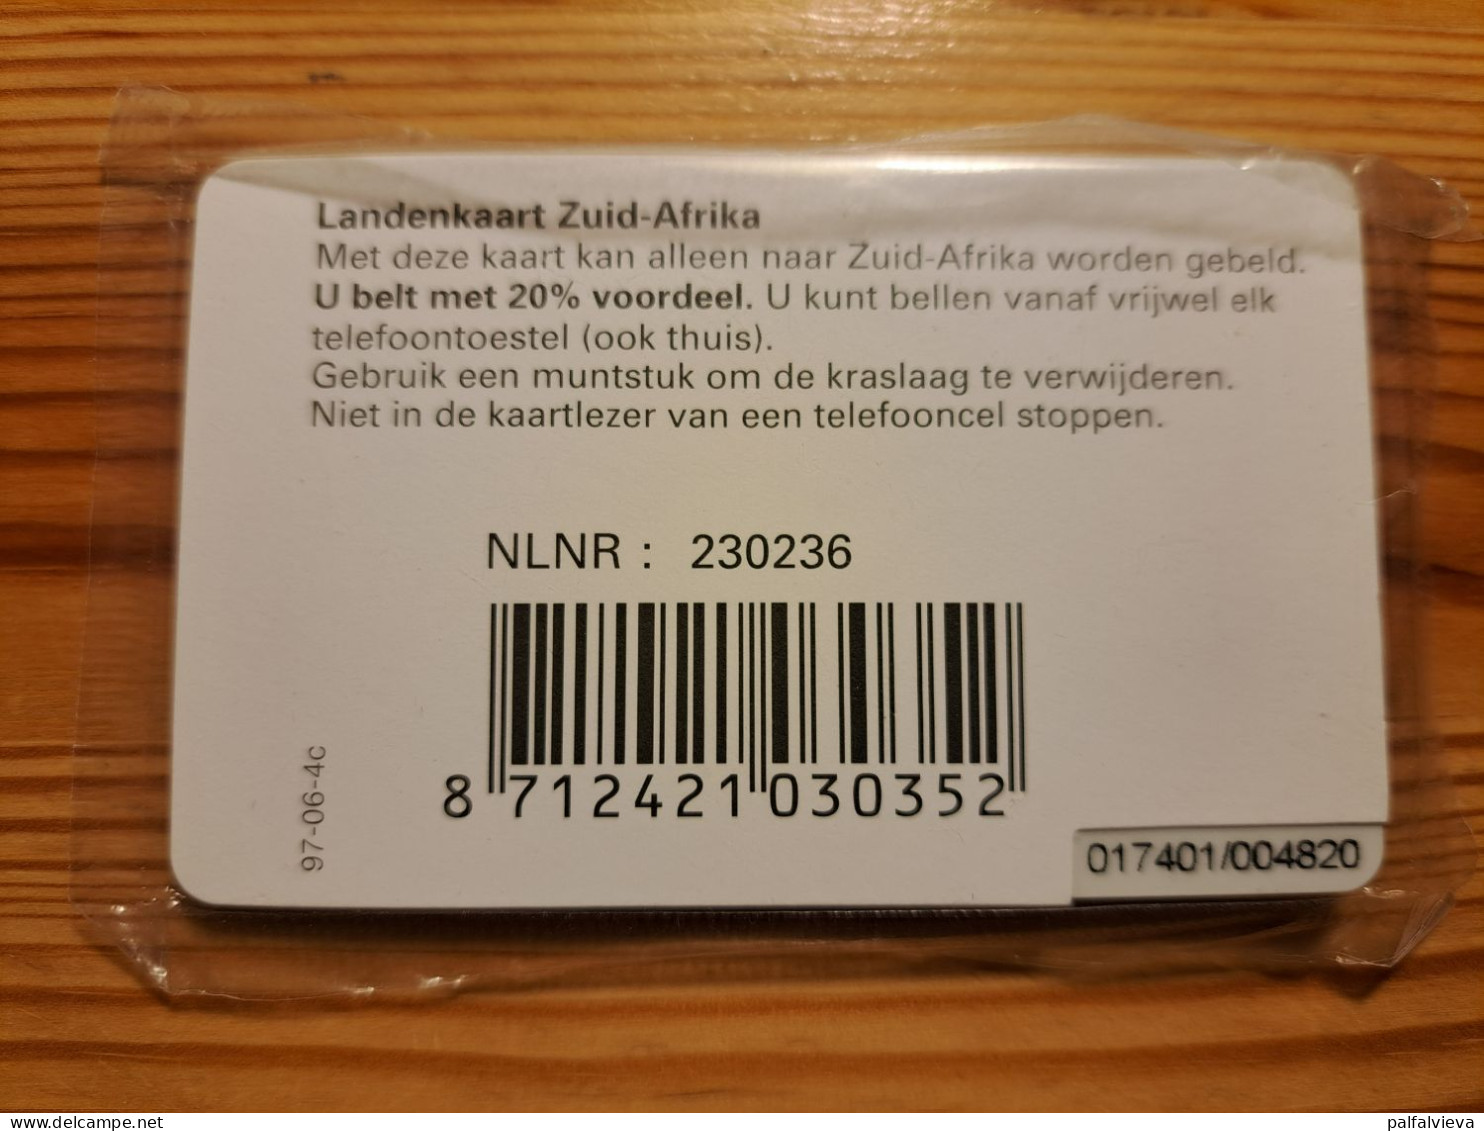 Prepaid Phonecard Netherlands, Kpn Telecom - Zuid-Afrikakaart, South Africa - Mint In Blister - Schede GSM, Prepagate E Ricariche